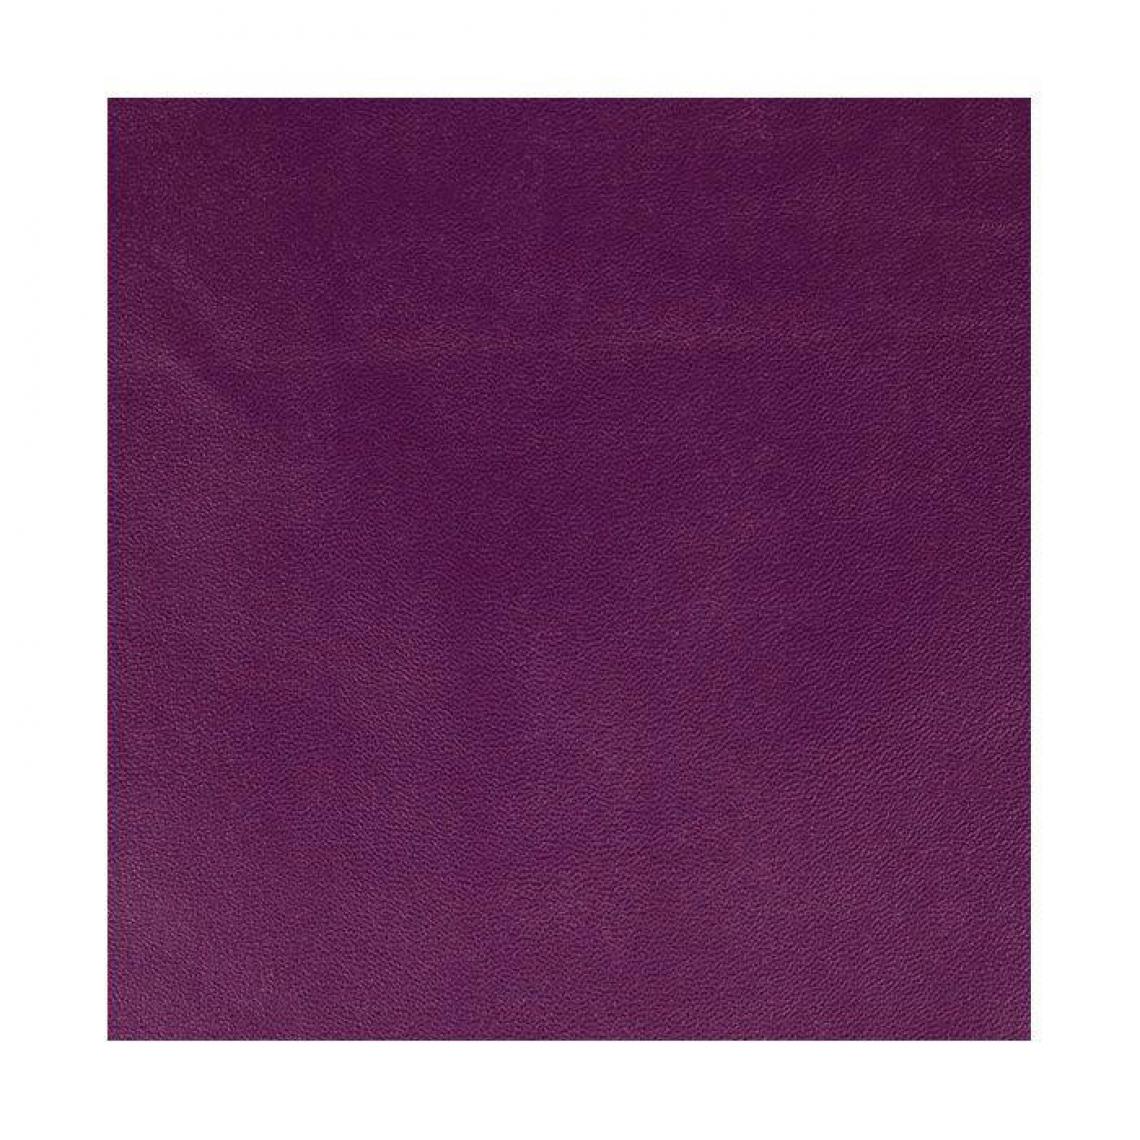 Artemio - Feuille simili cuir 350 g/ m² - 30 x 30 cm - Violet - Dessin et peinture